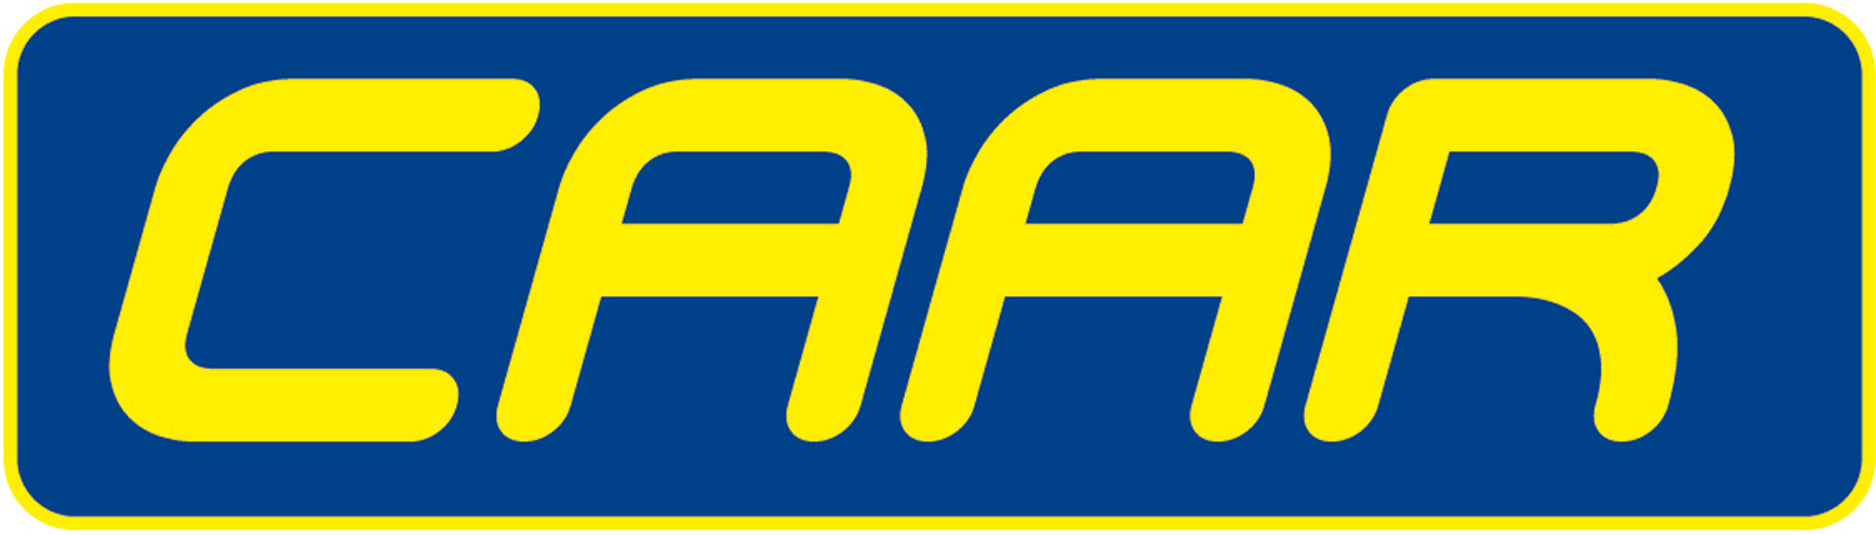 CAAR logo